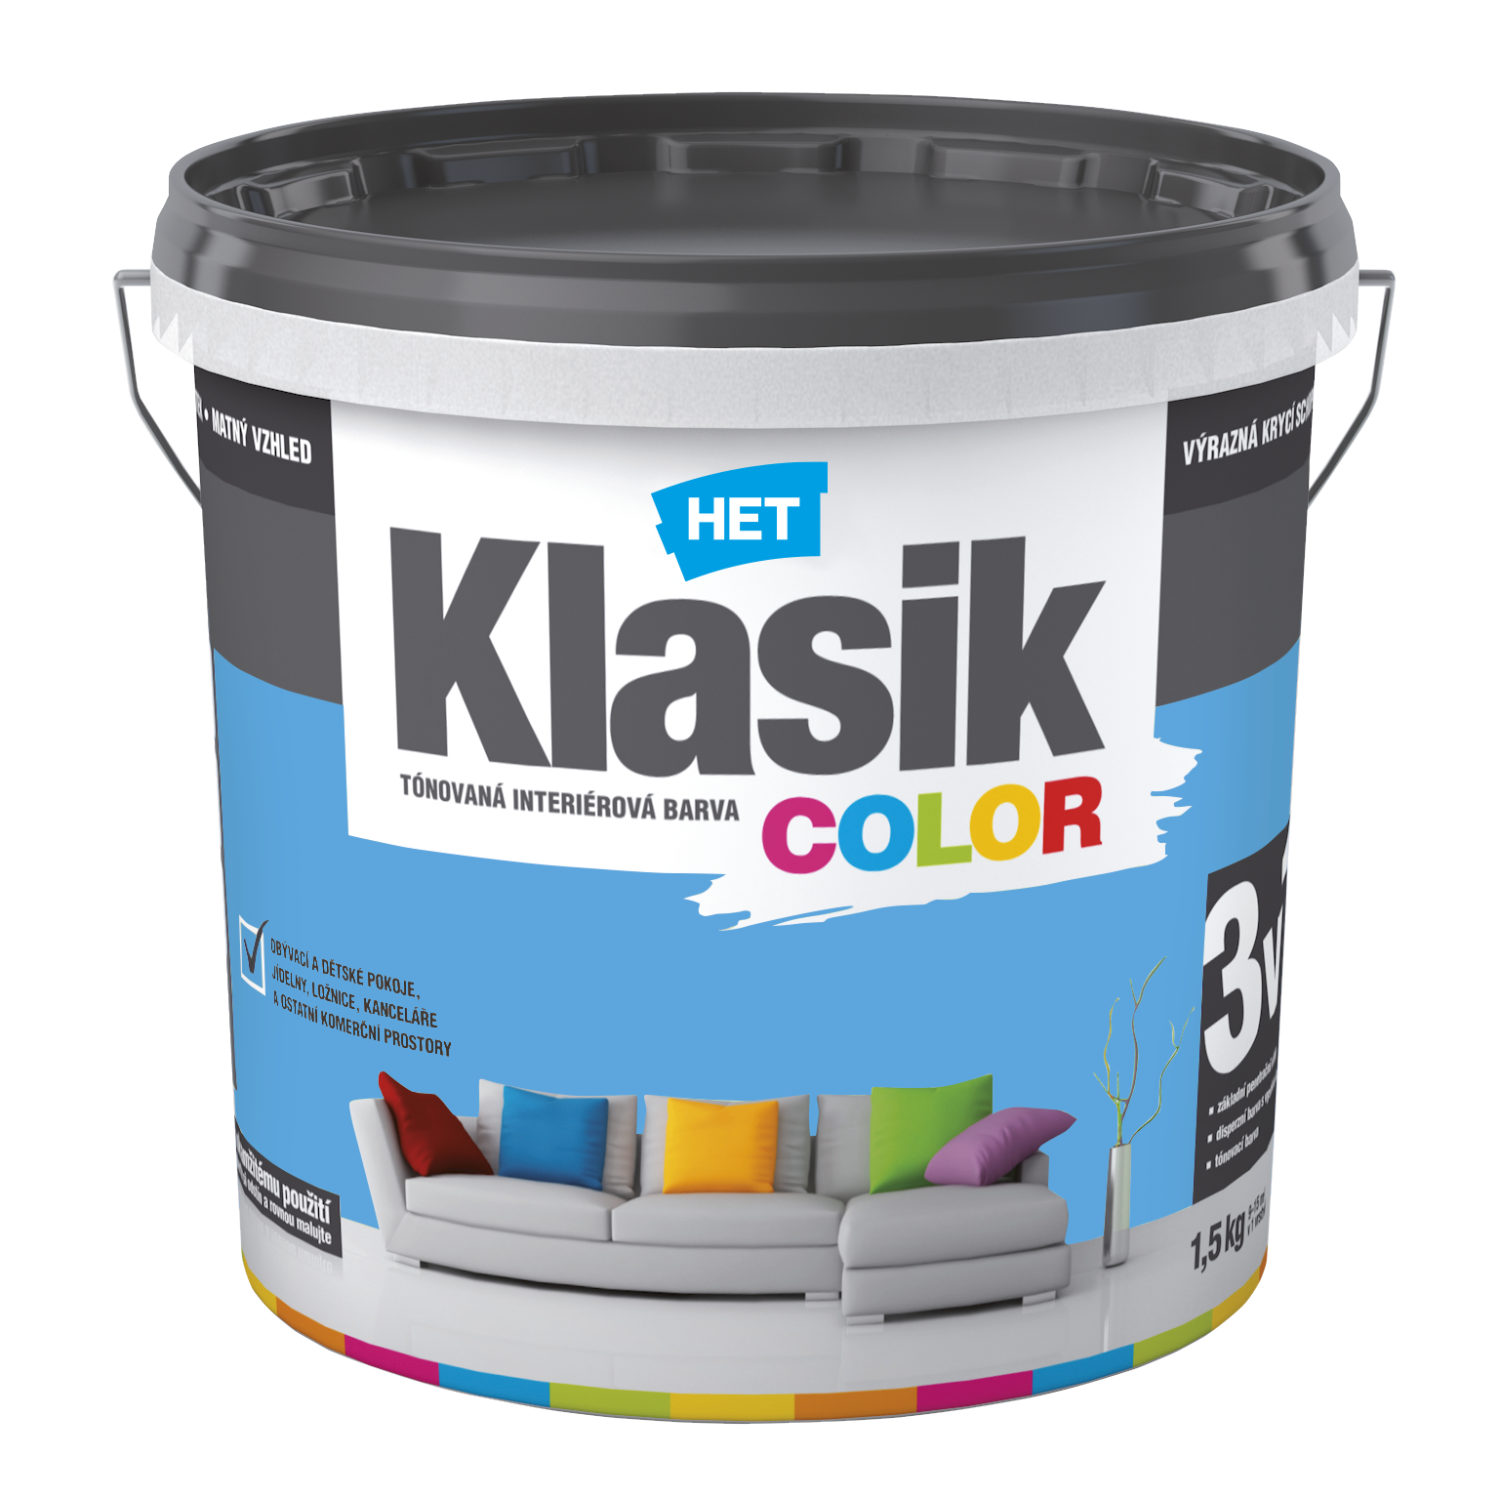 HET Klasik COLOR tónovaná interiérová akrylátová disperzná oteruvzdorná farba 1,5 kg, KC0417 - modrý azúrový